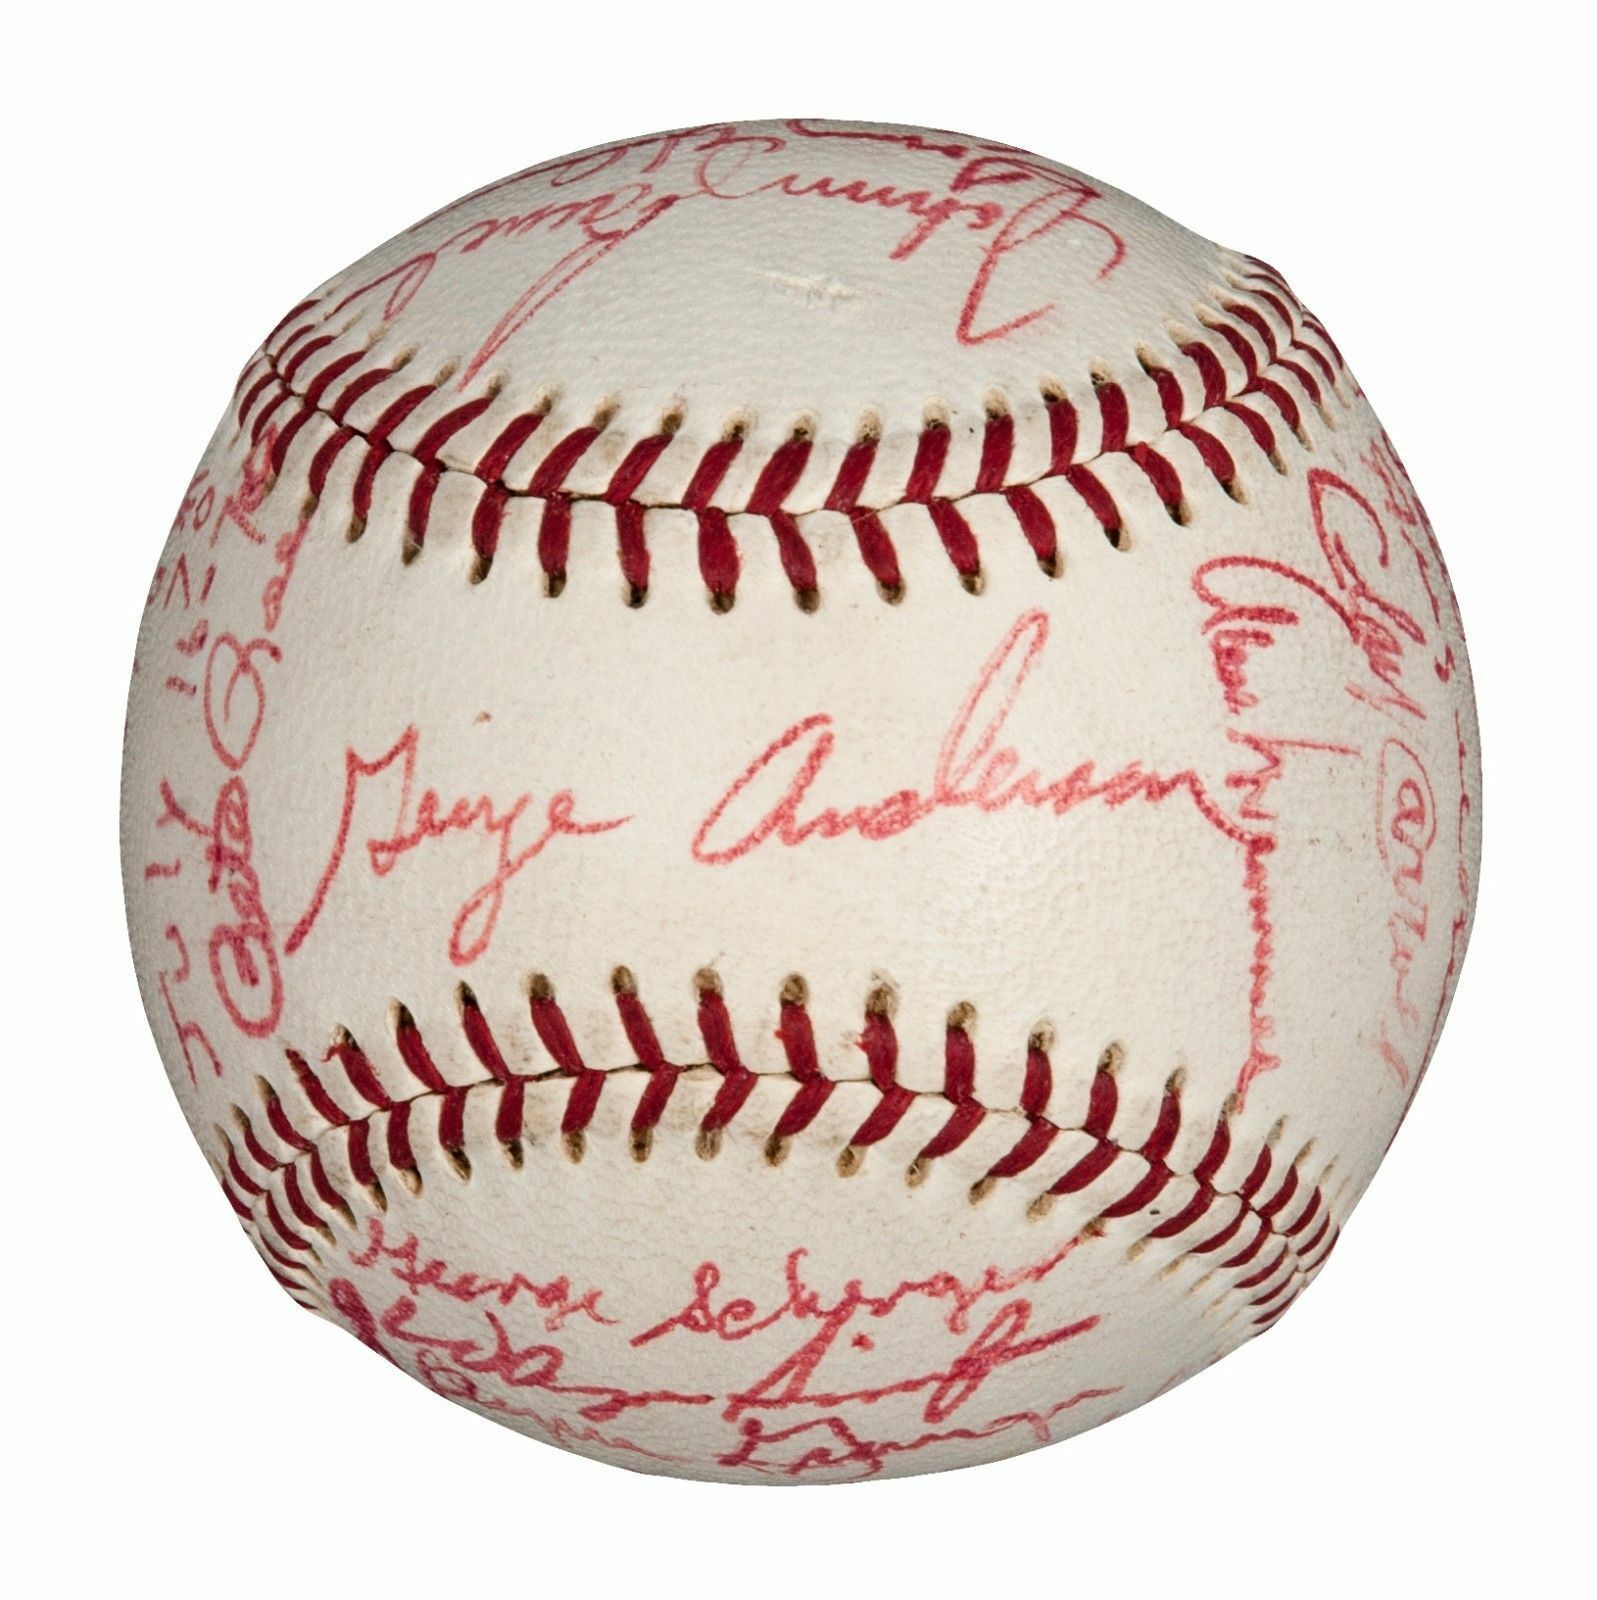 1975 Cincinnati Reds Team Signed Baseball